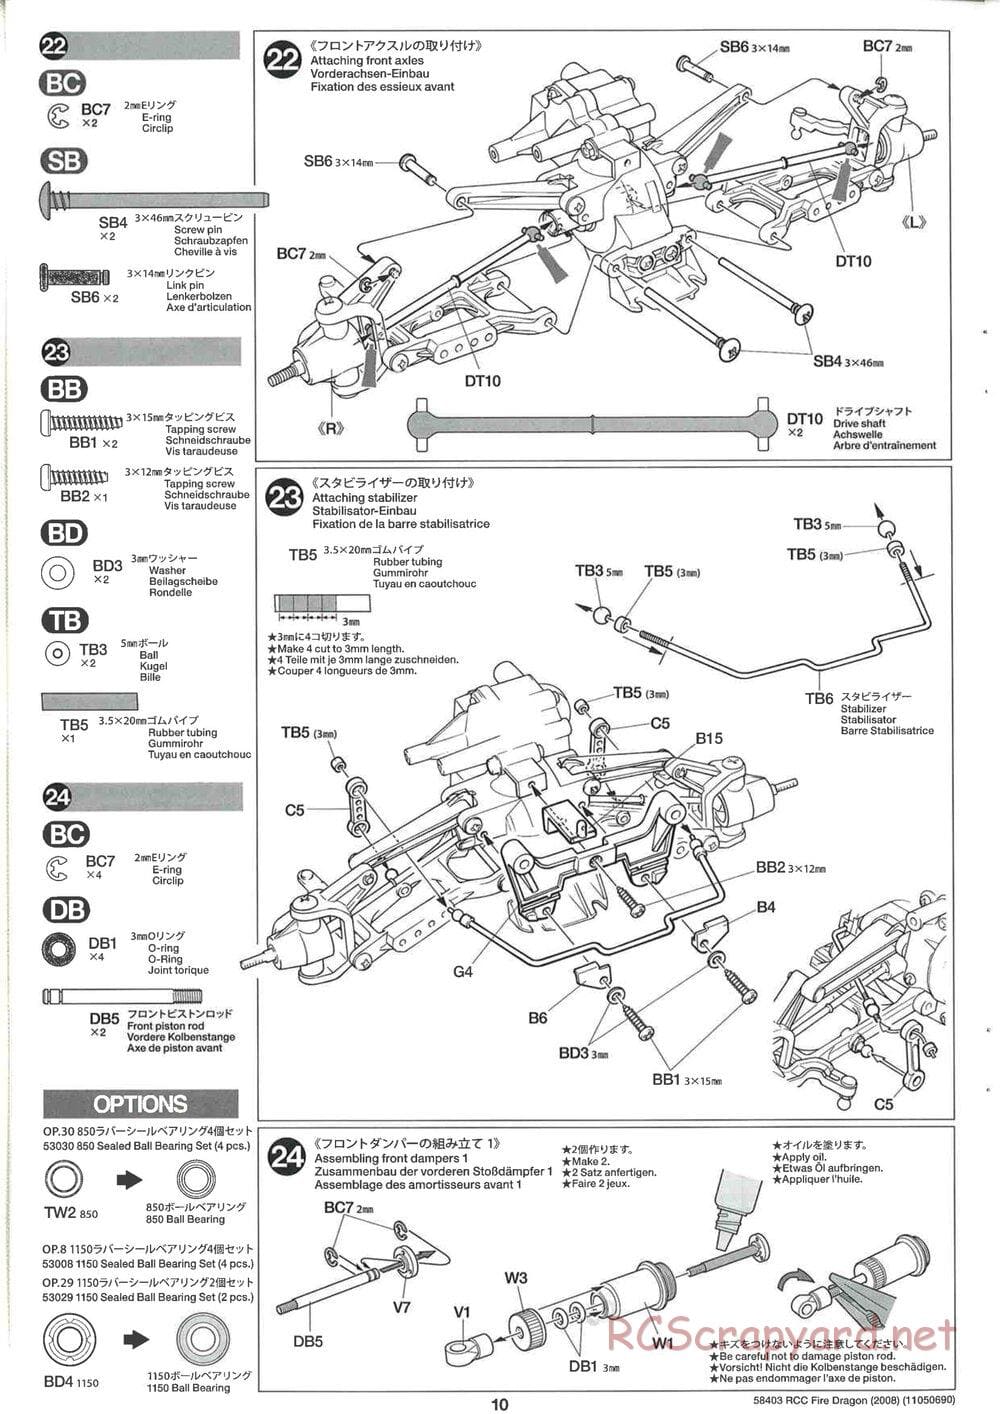 Tamiya - Fire Dragon 2008 - TS2 Chassis - Manual - Page 10